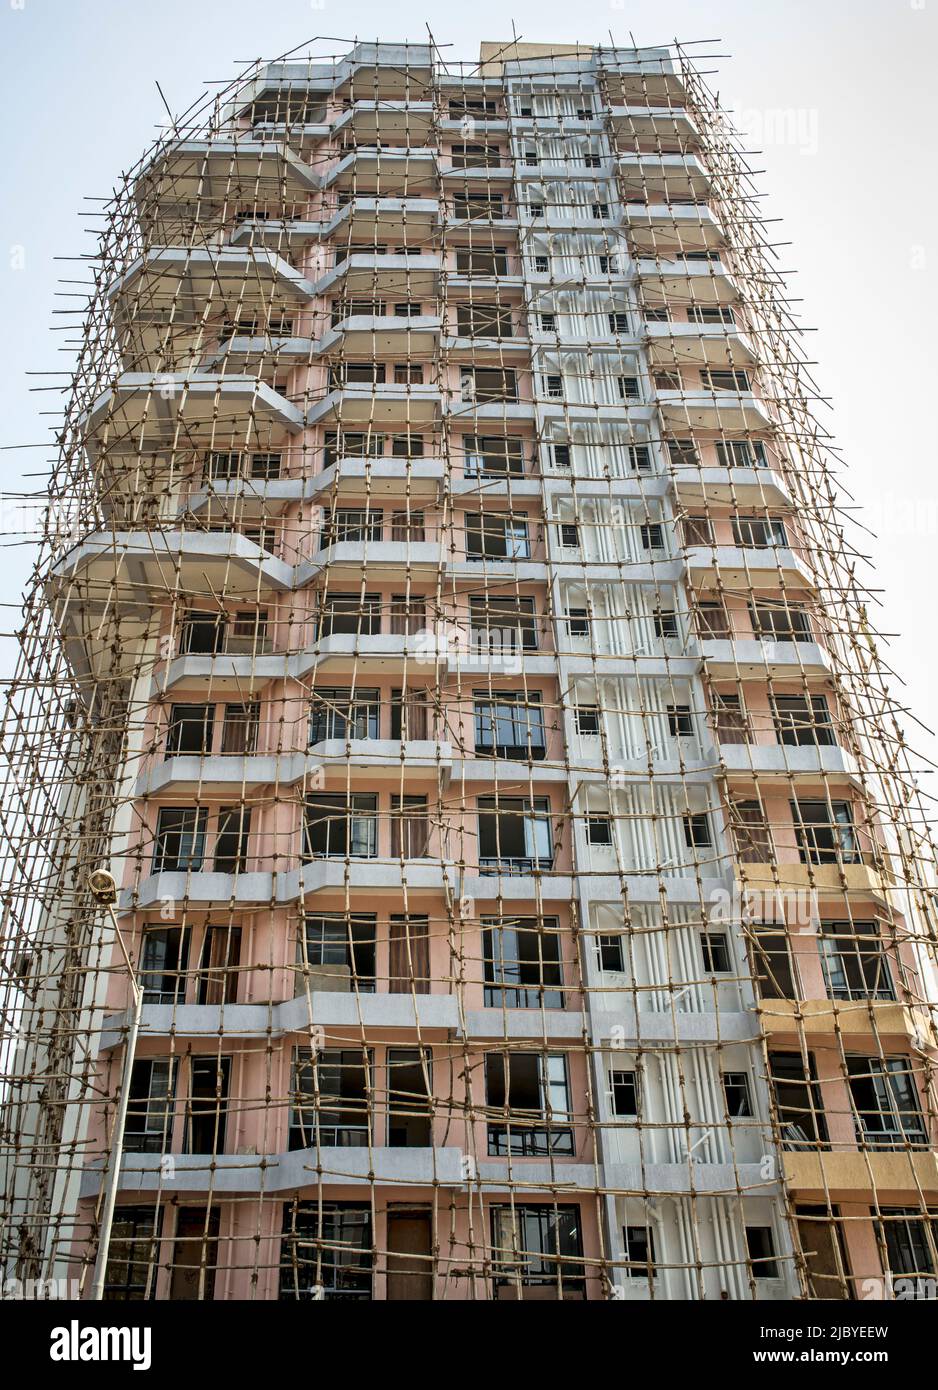 Edificio moderno de gran altura en construcción rodeado de andamios de bambú Foto de stock